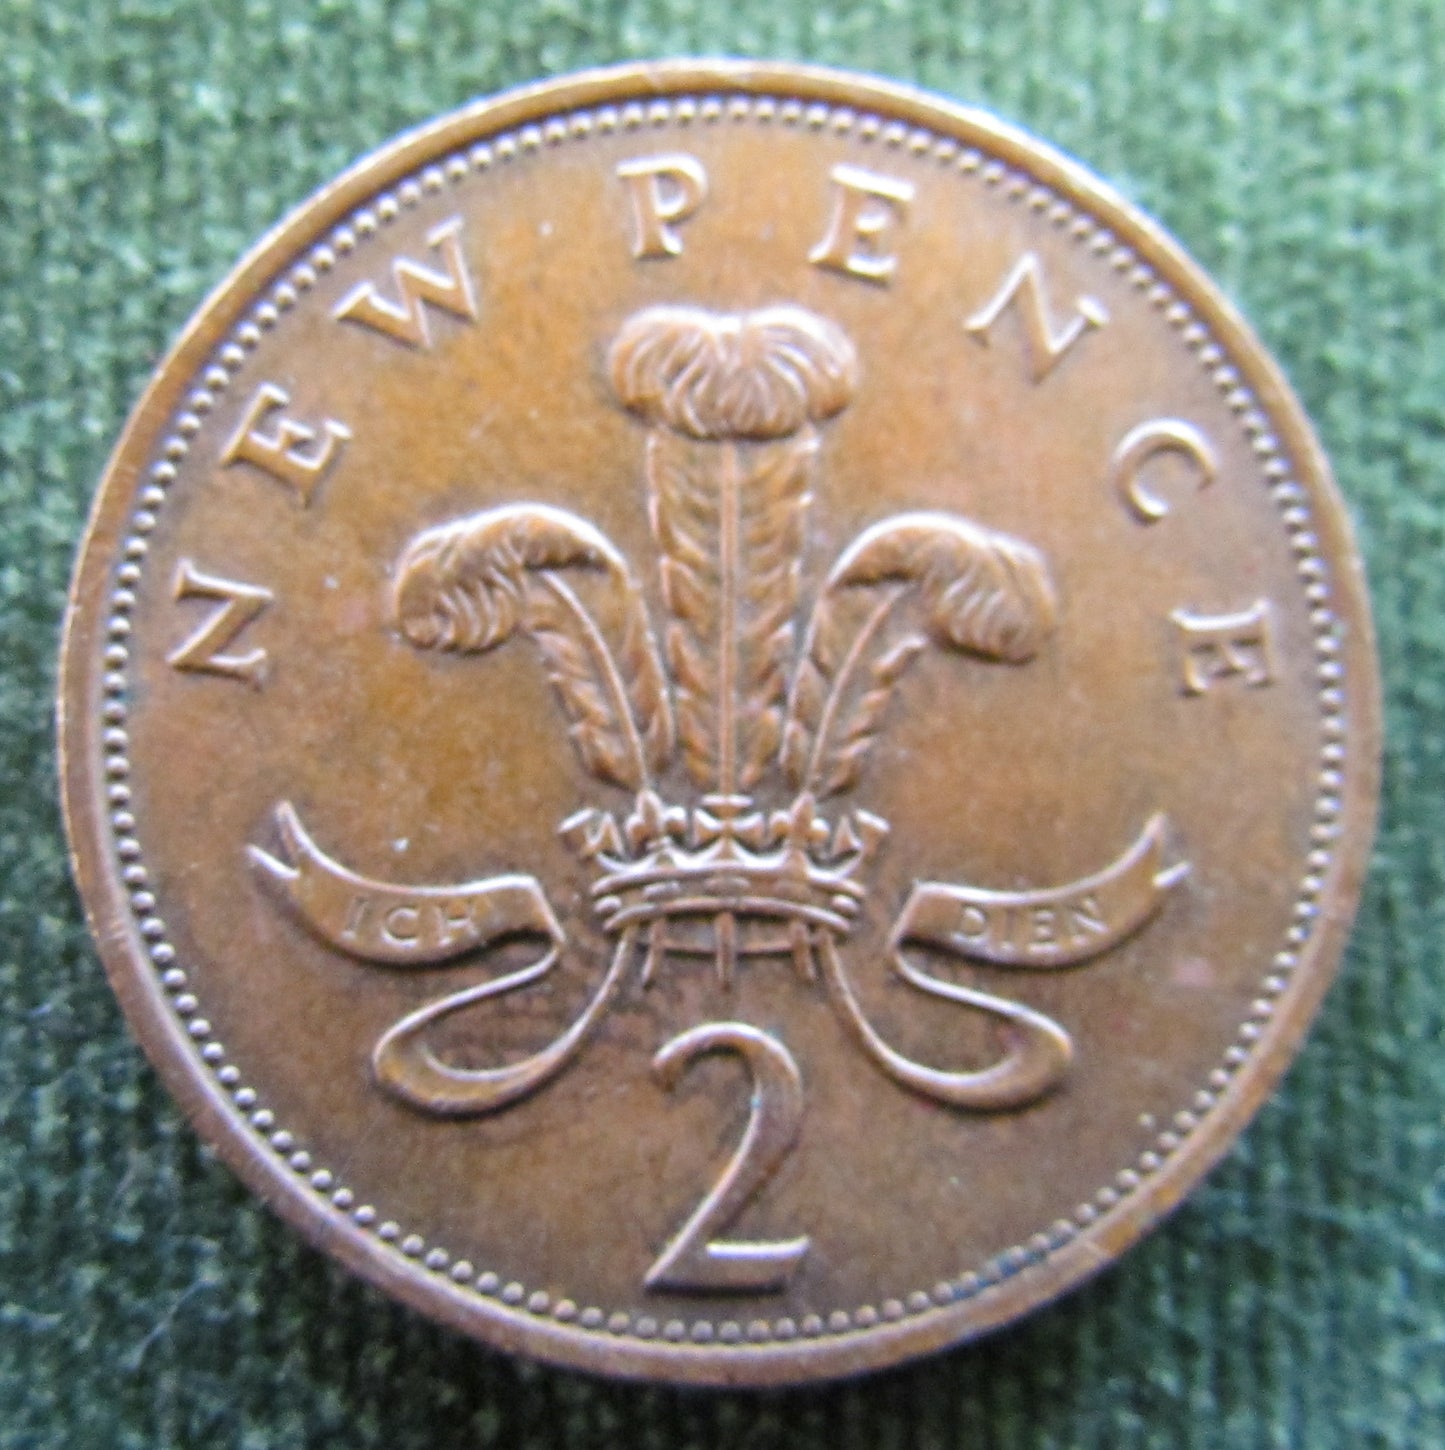 GB British UK English 1981 2 New Pence Queen Elizabeth II Coin